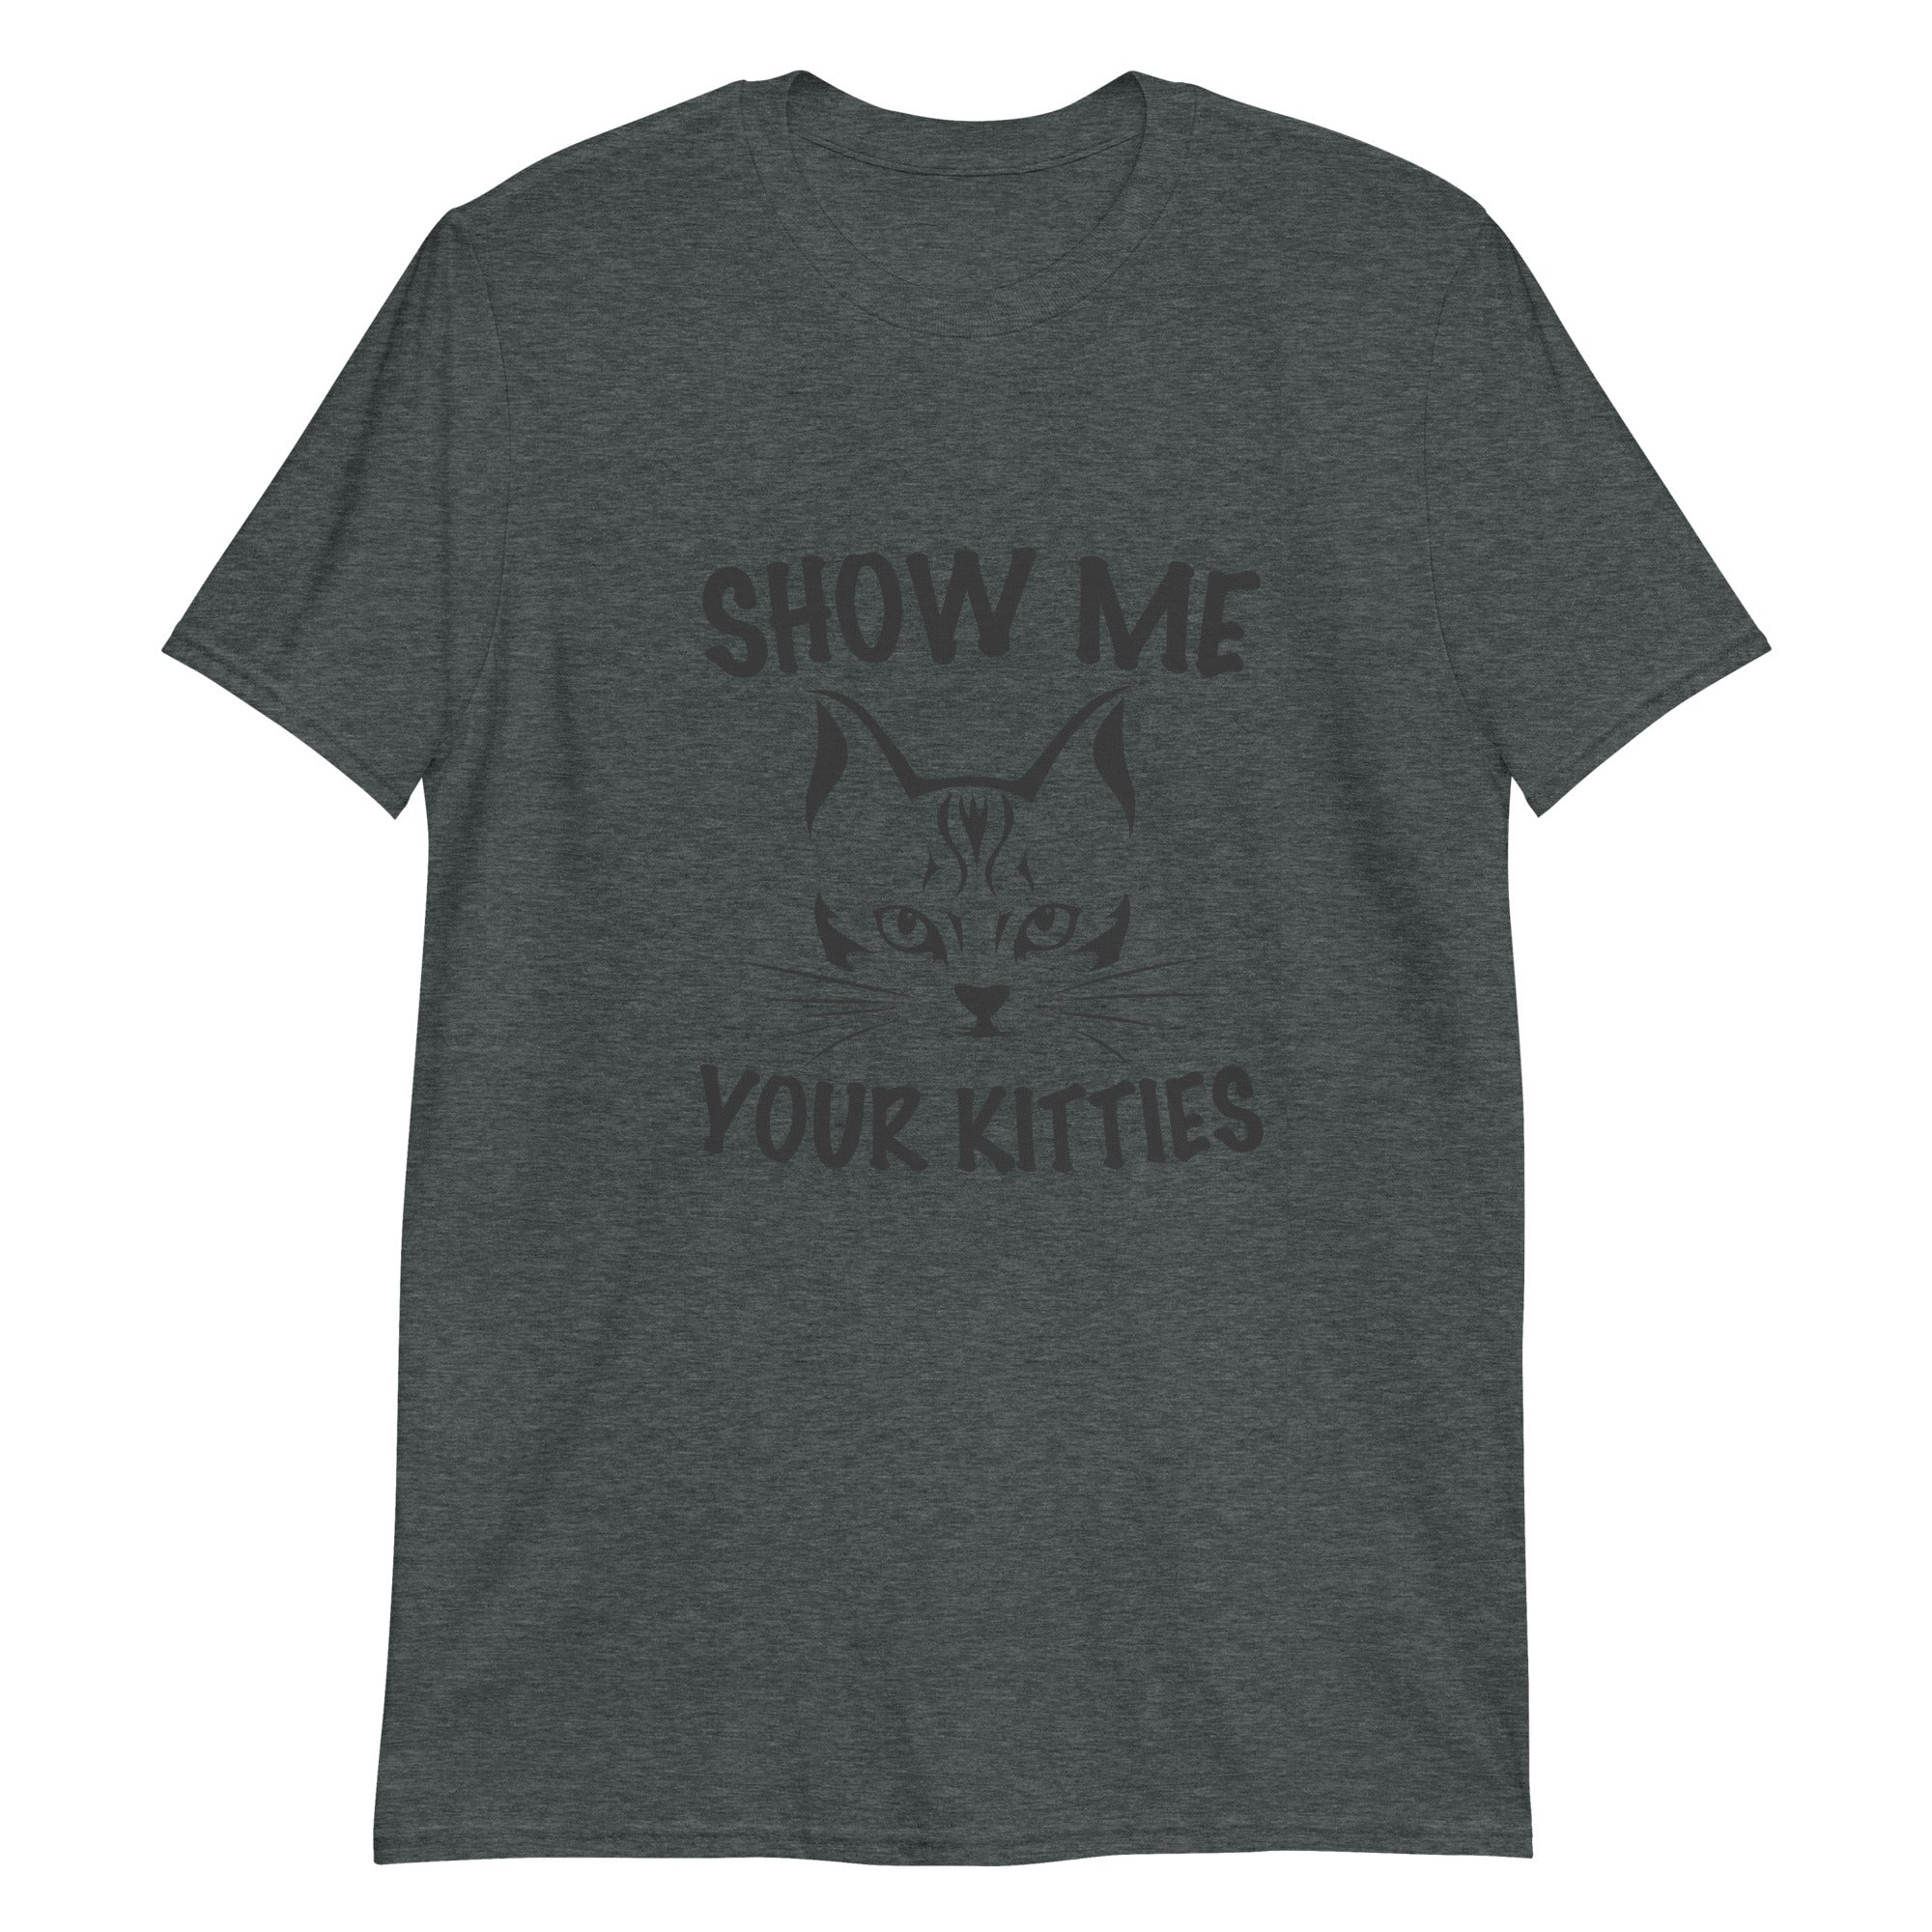 How Me Your Kitties Short-Sleeve Unisex T-Shirt